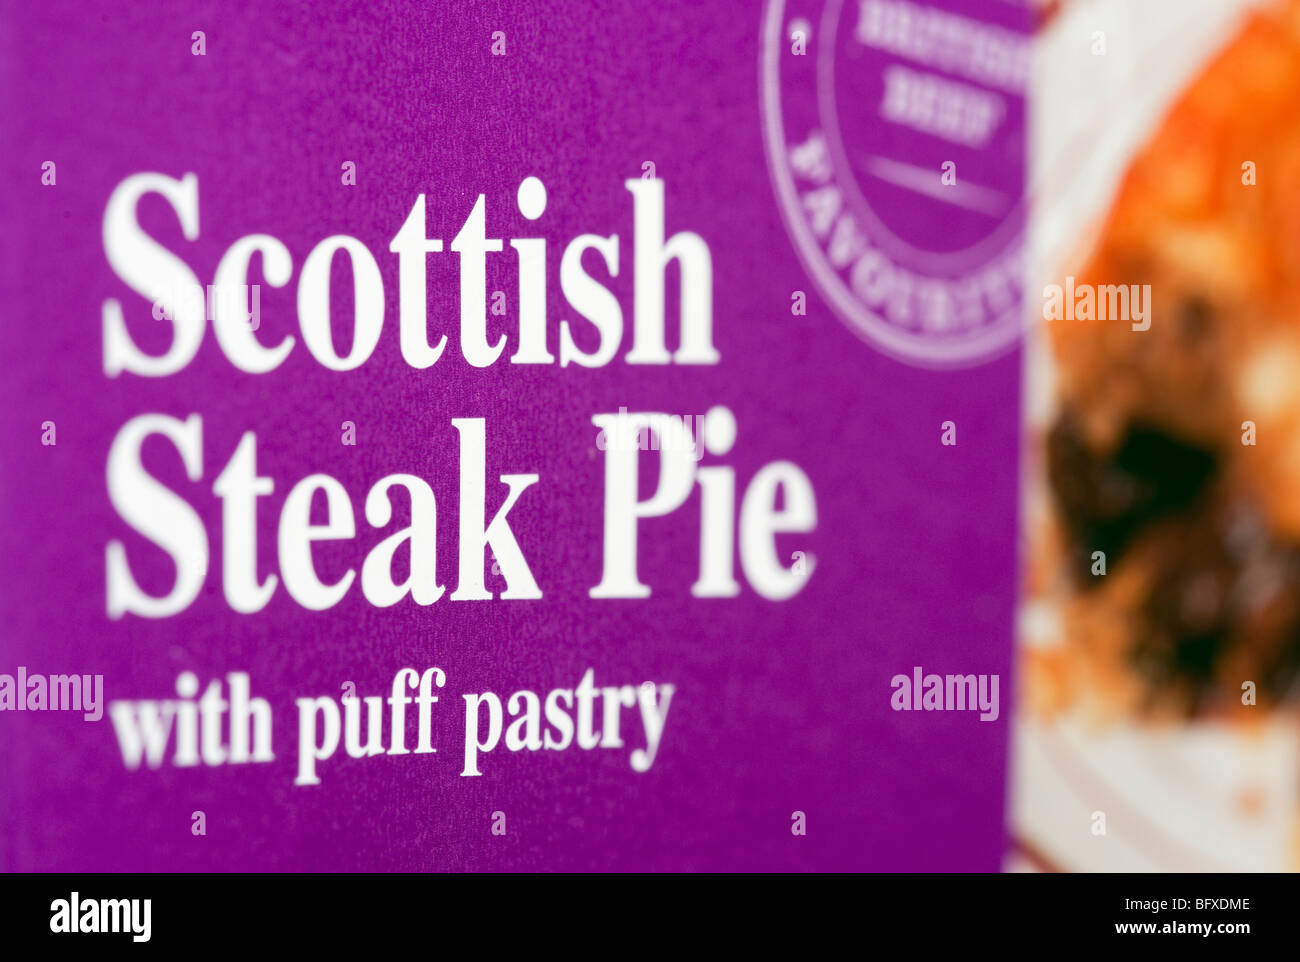 Scottish Steak Pie with puff pastry label Stock Photo